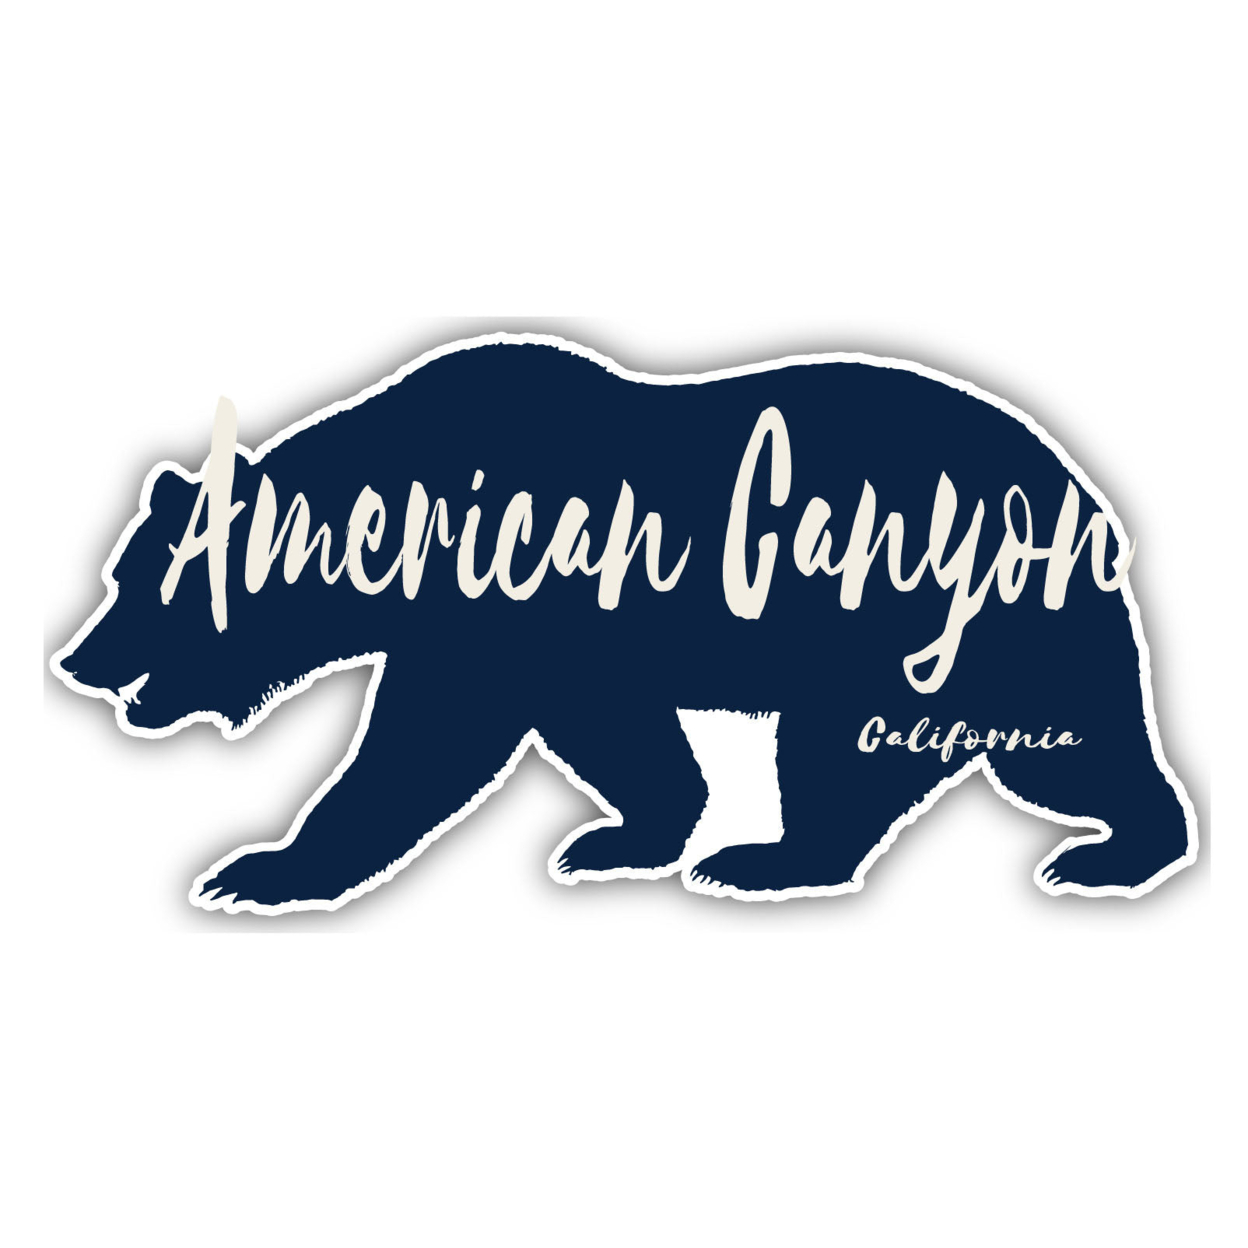 American Canyon California Souvenir Decorative Stickers (Choose Theme And Size) - Single Unit, 8-Inch, Bear